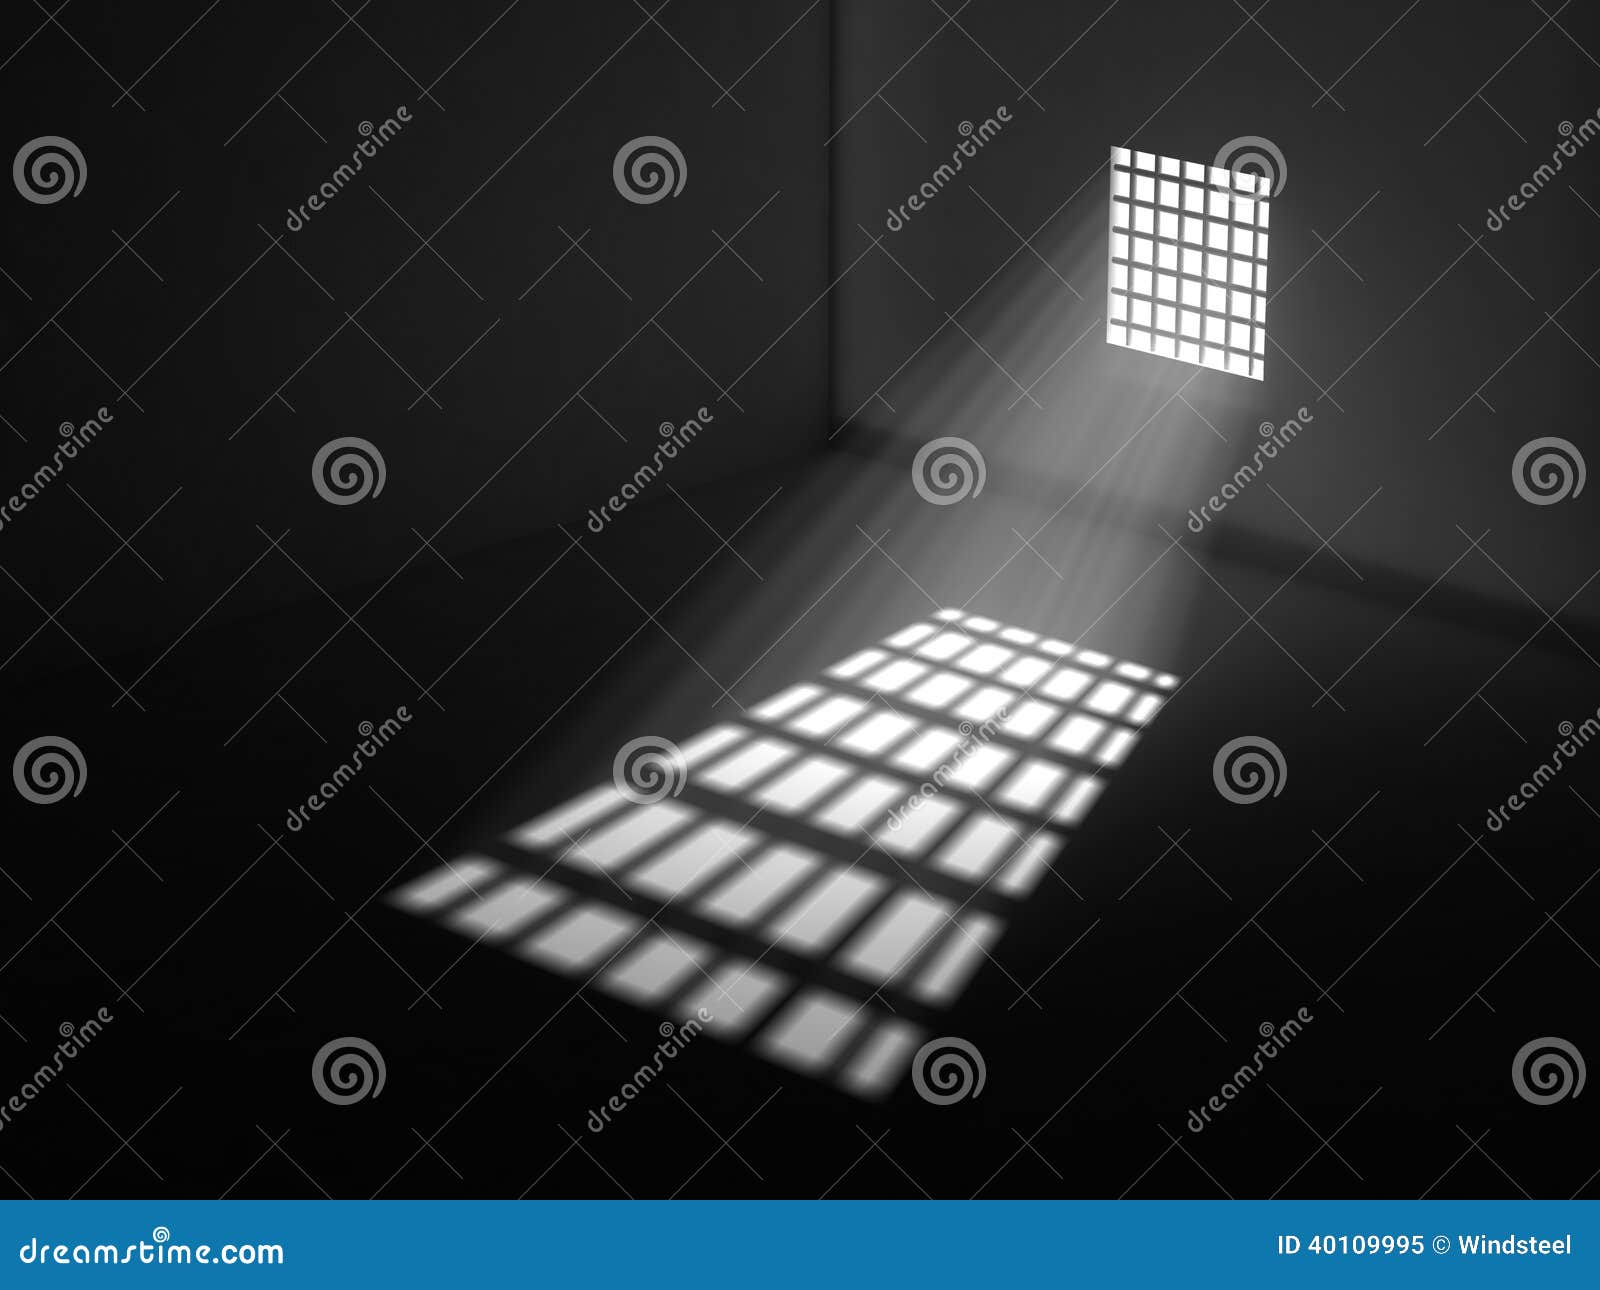 light through the latticed prison window